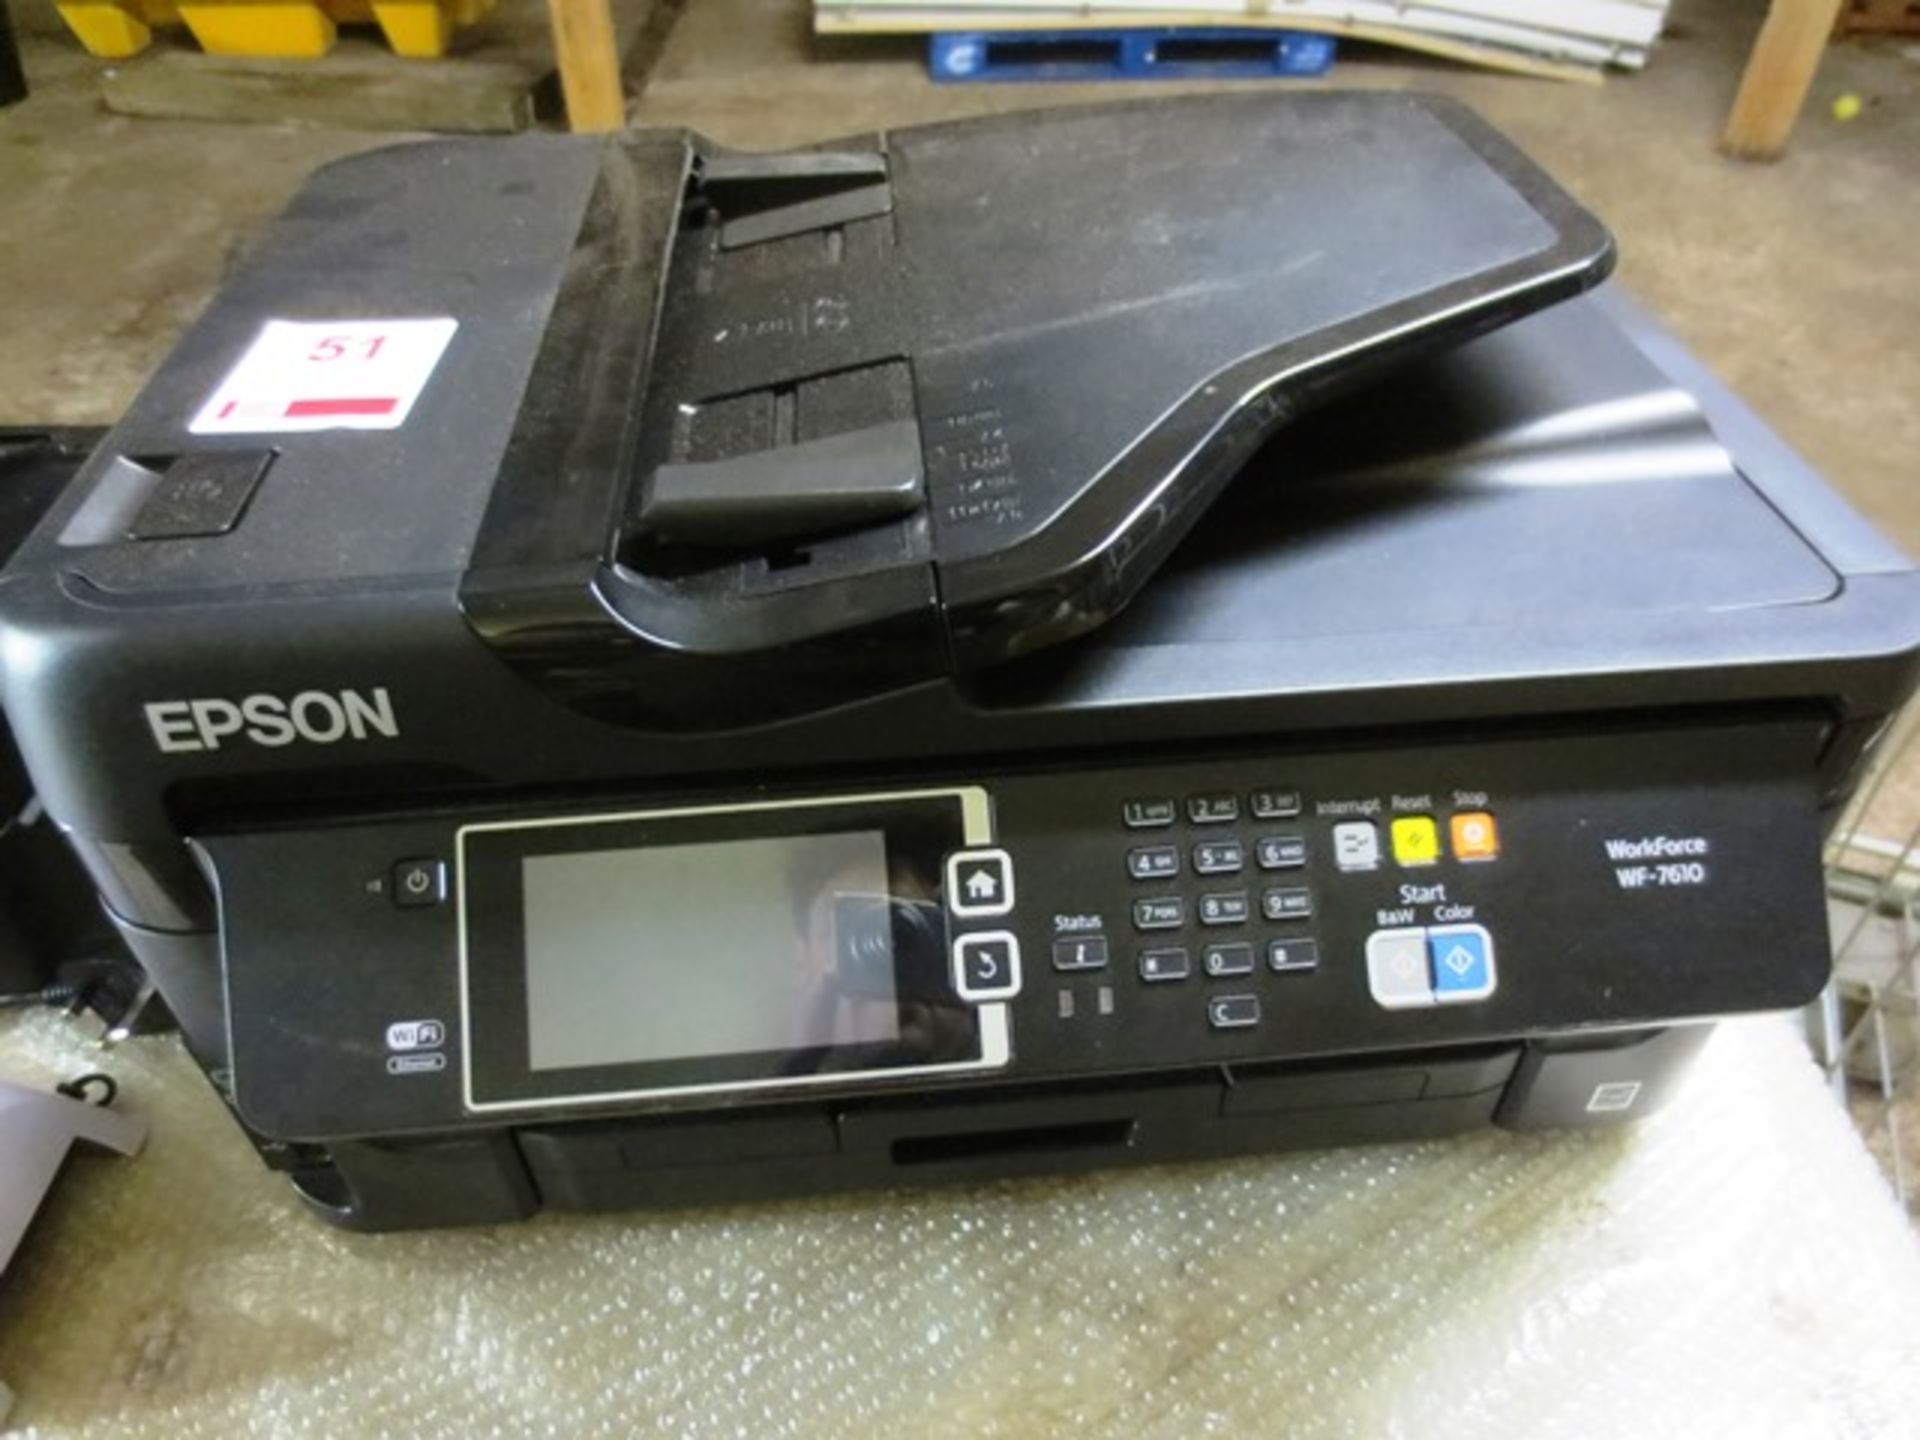 Epson Workforce WF-7610 printer/scan/copy